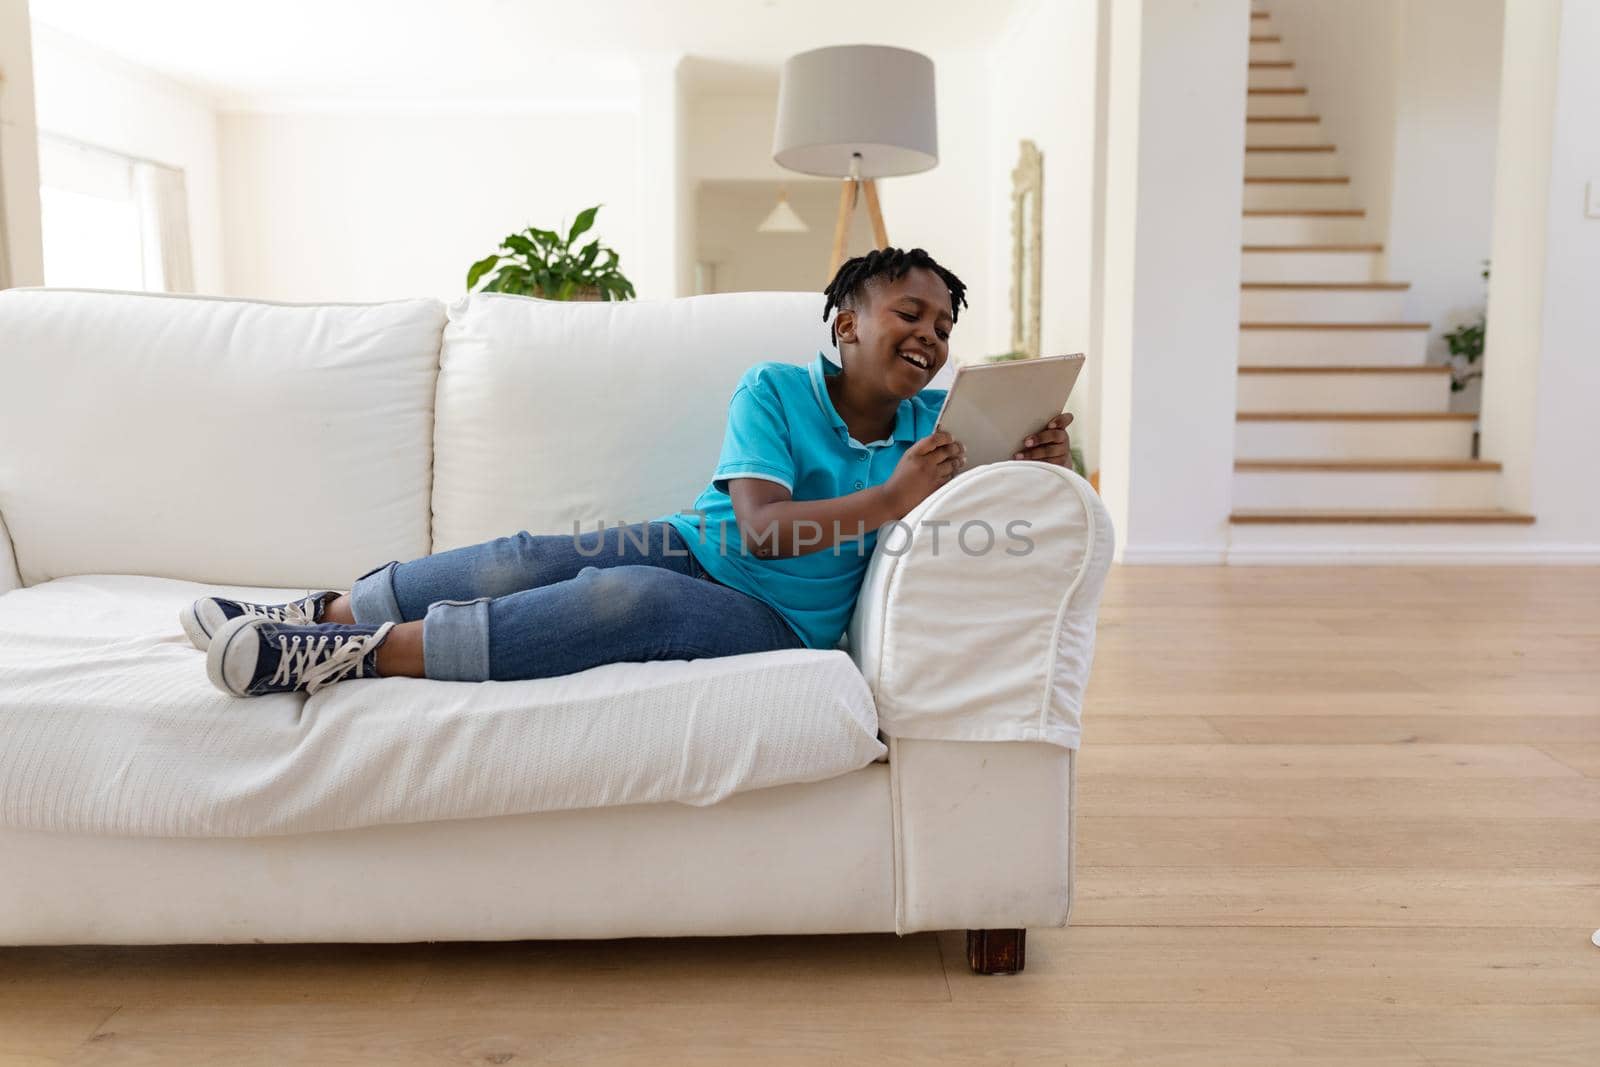 Smiling african american boy with short dreadlocks lying on couch using digital tablet by Wavebreakmedia